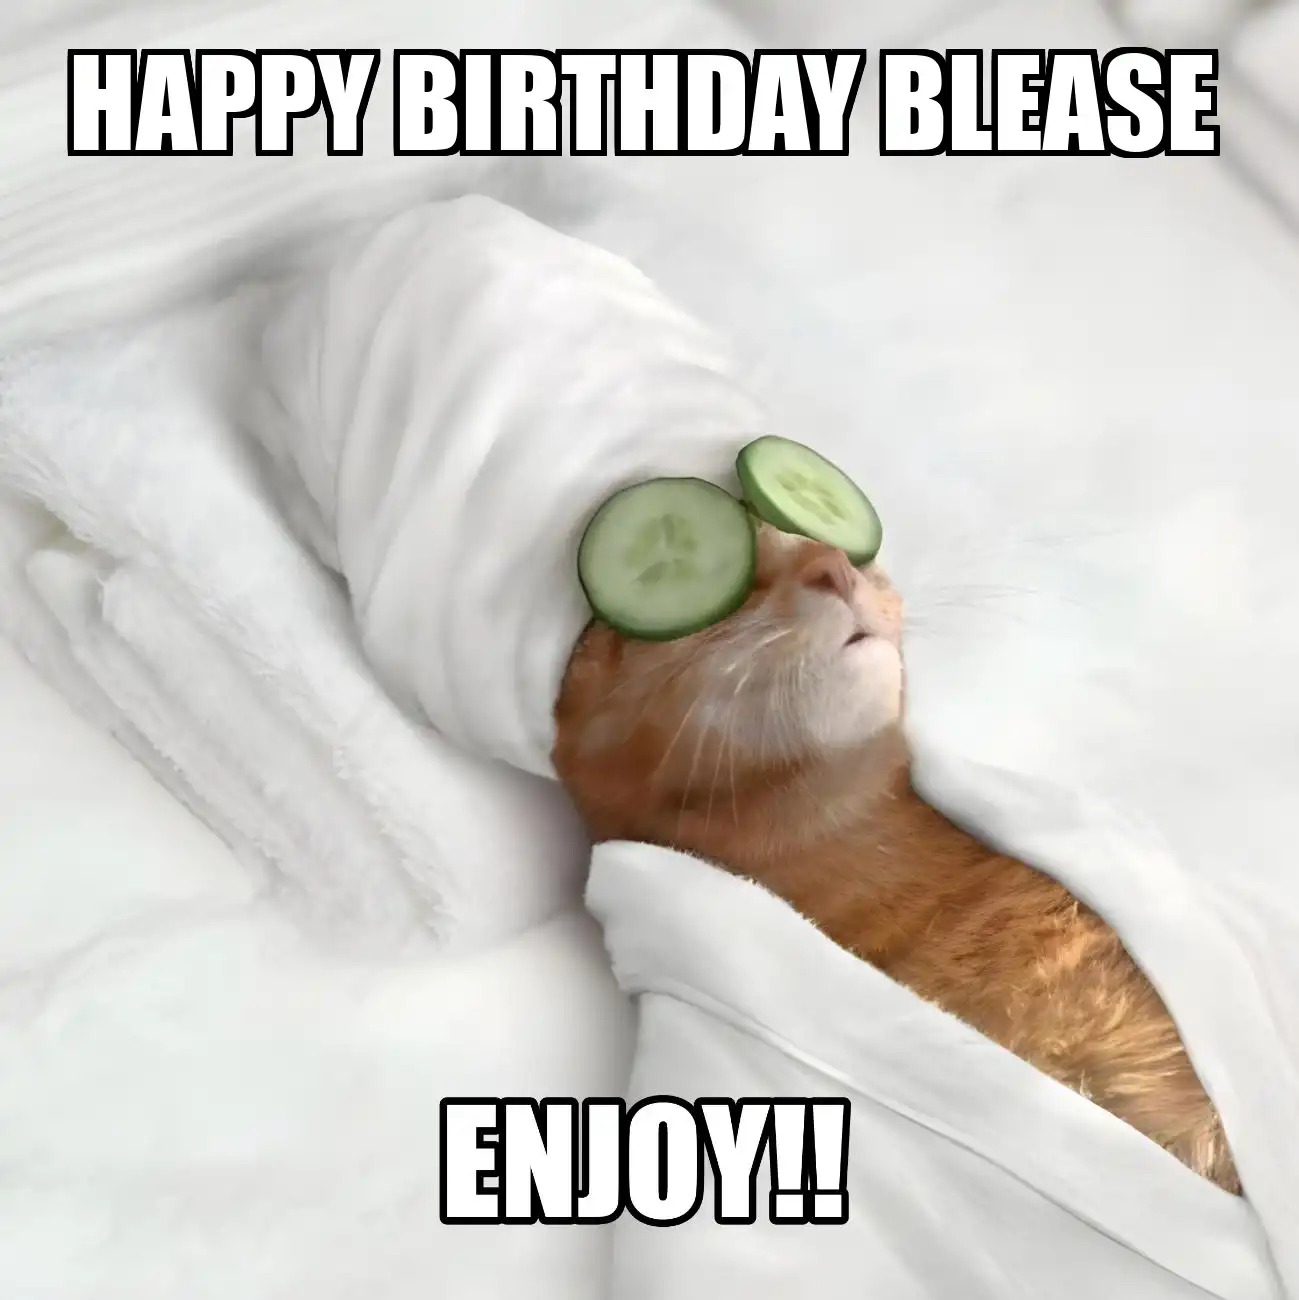 Happy Birthday Blease Enjoy Cat Meme